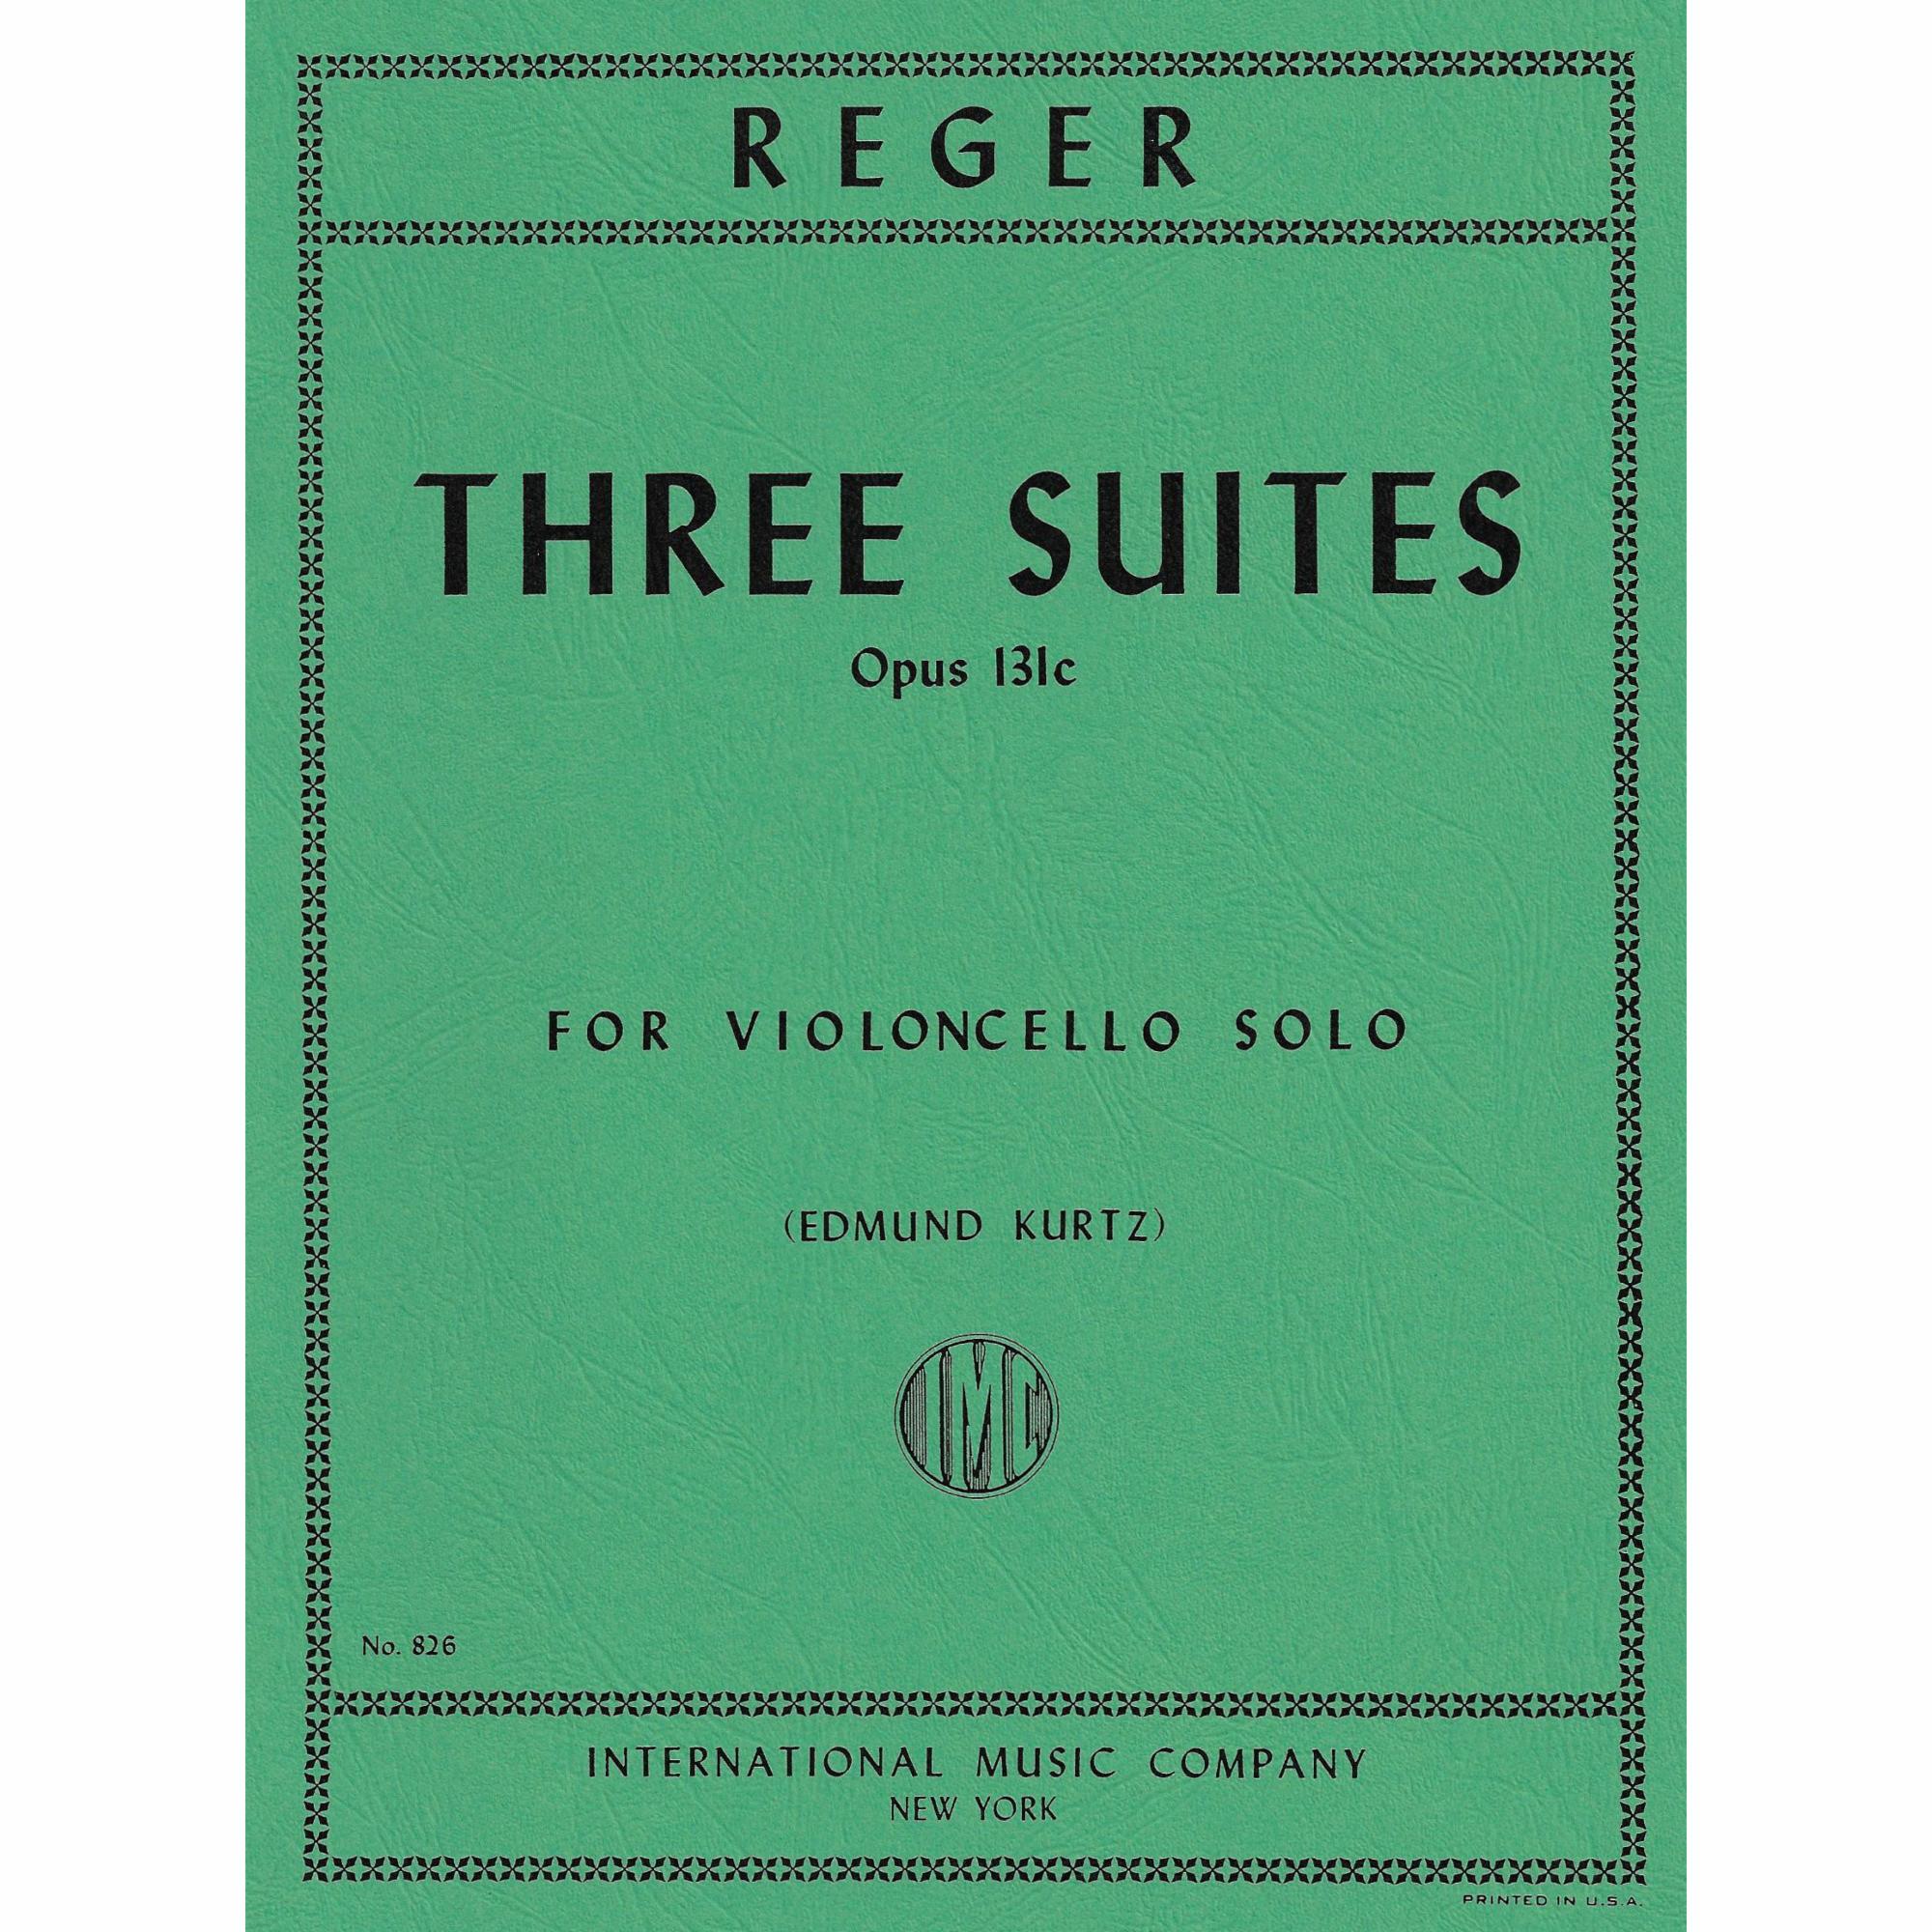 Reger -- Three Suites, Op. 131c for Solo Cello